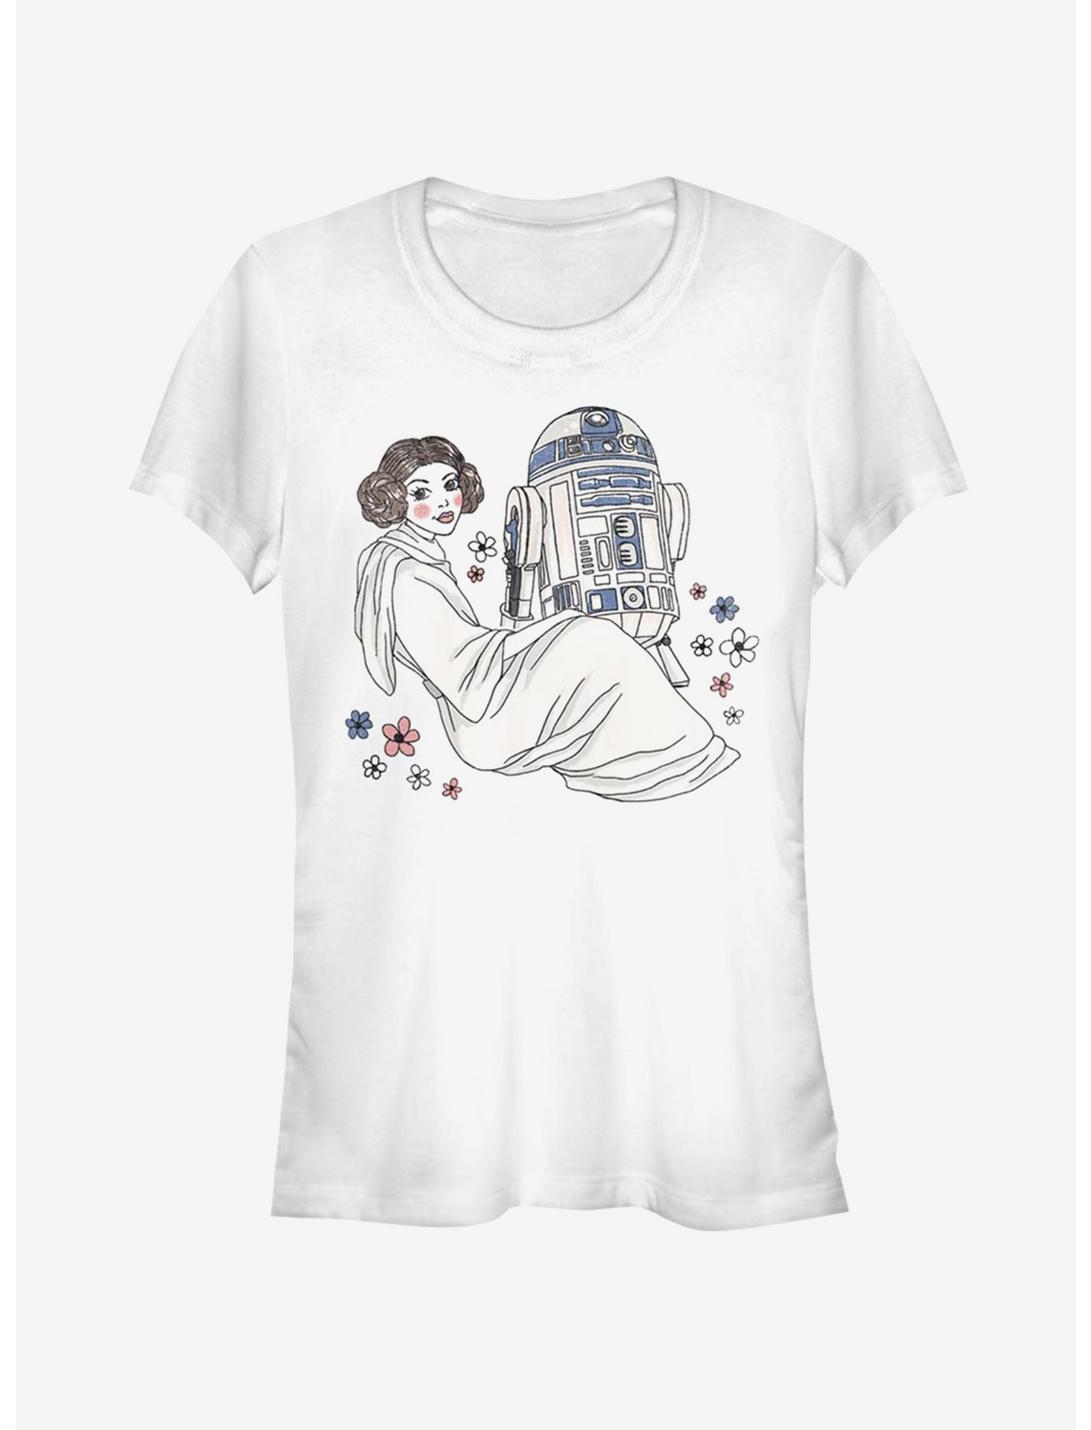 Star Wars Galaxy Friends Girls T-Shirt, WHITE, hi-res